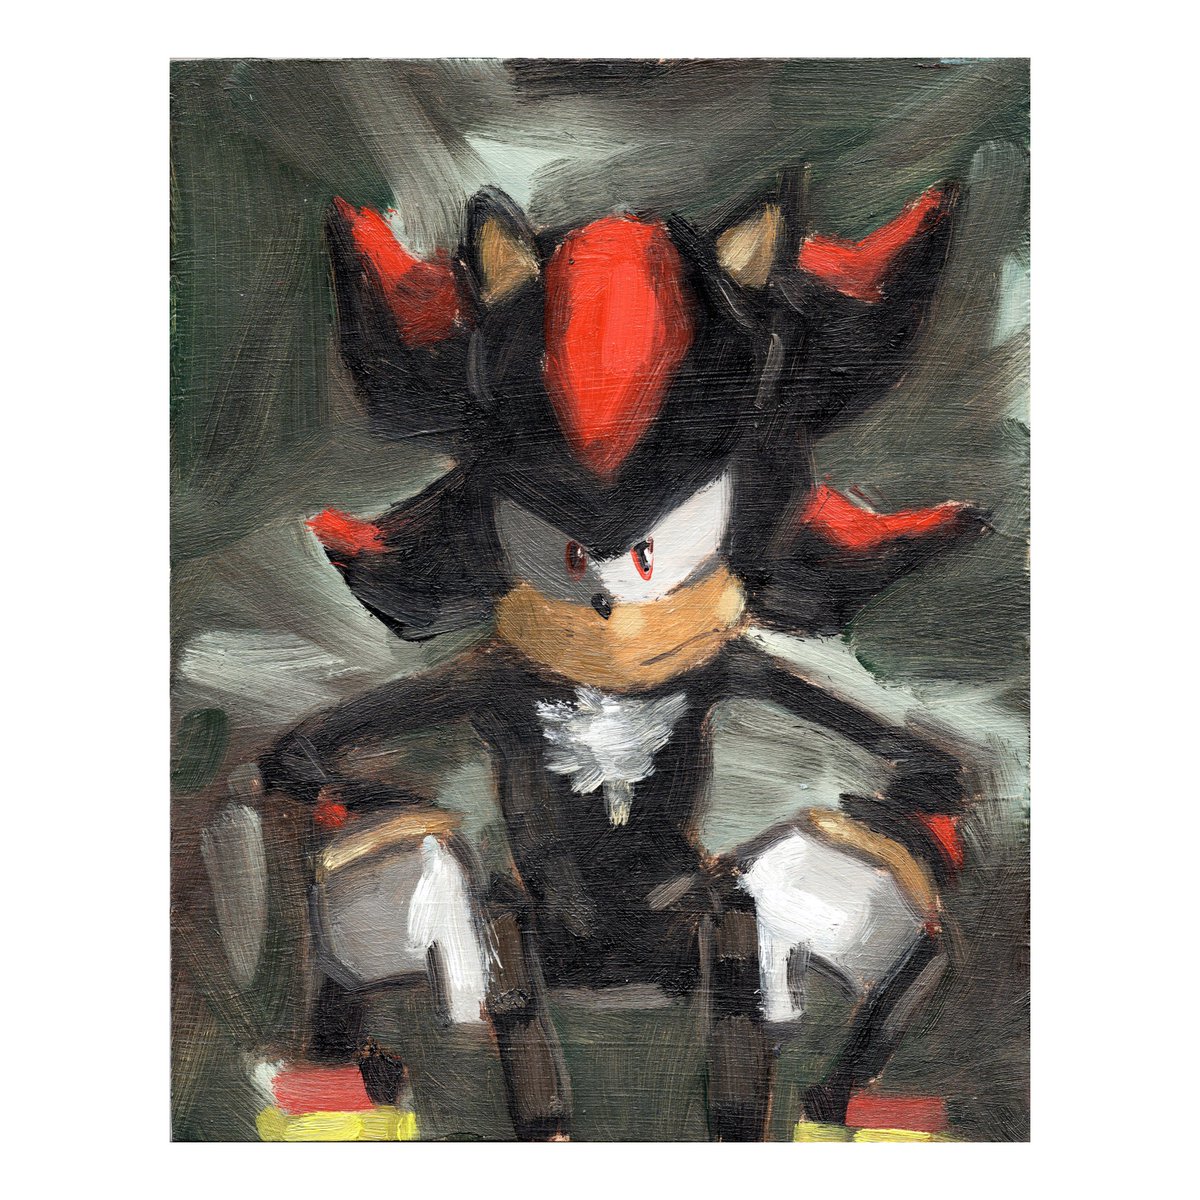 Shadow - Blackops Pose Oil on wood panel, 8”x 10”